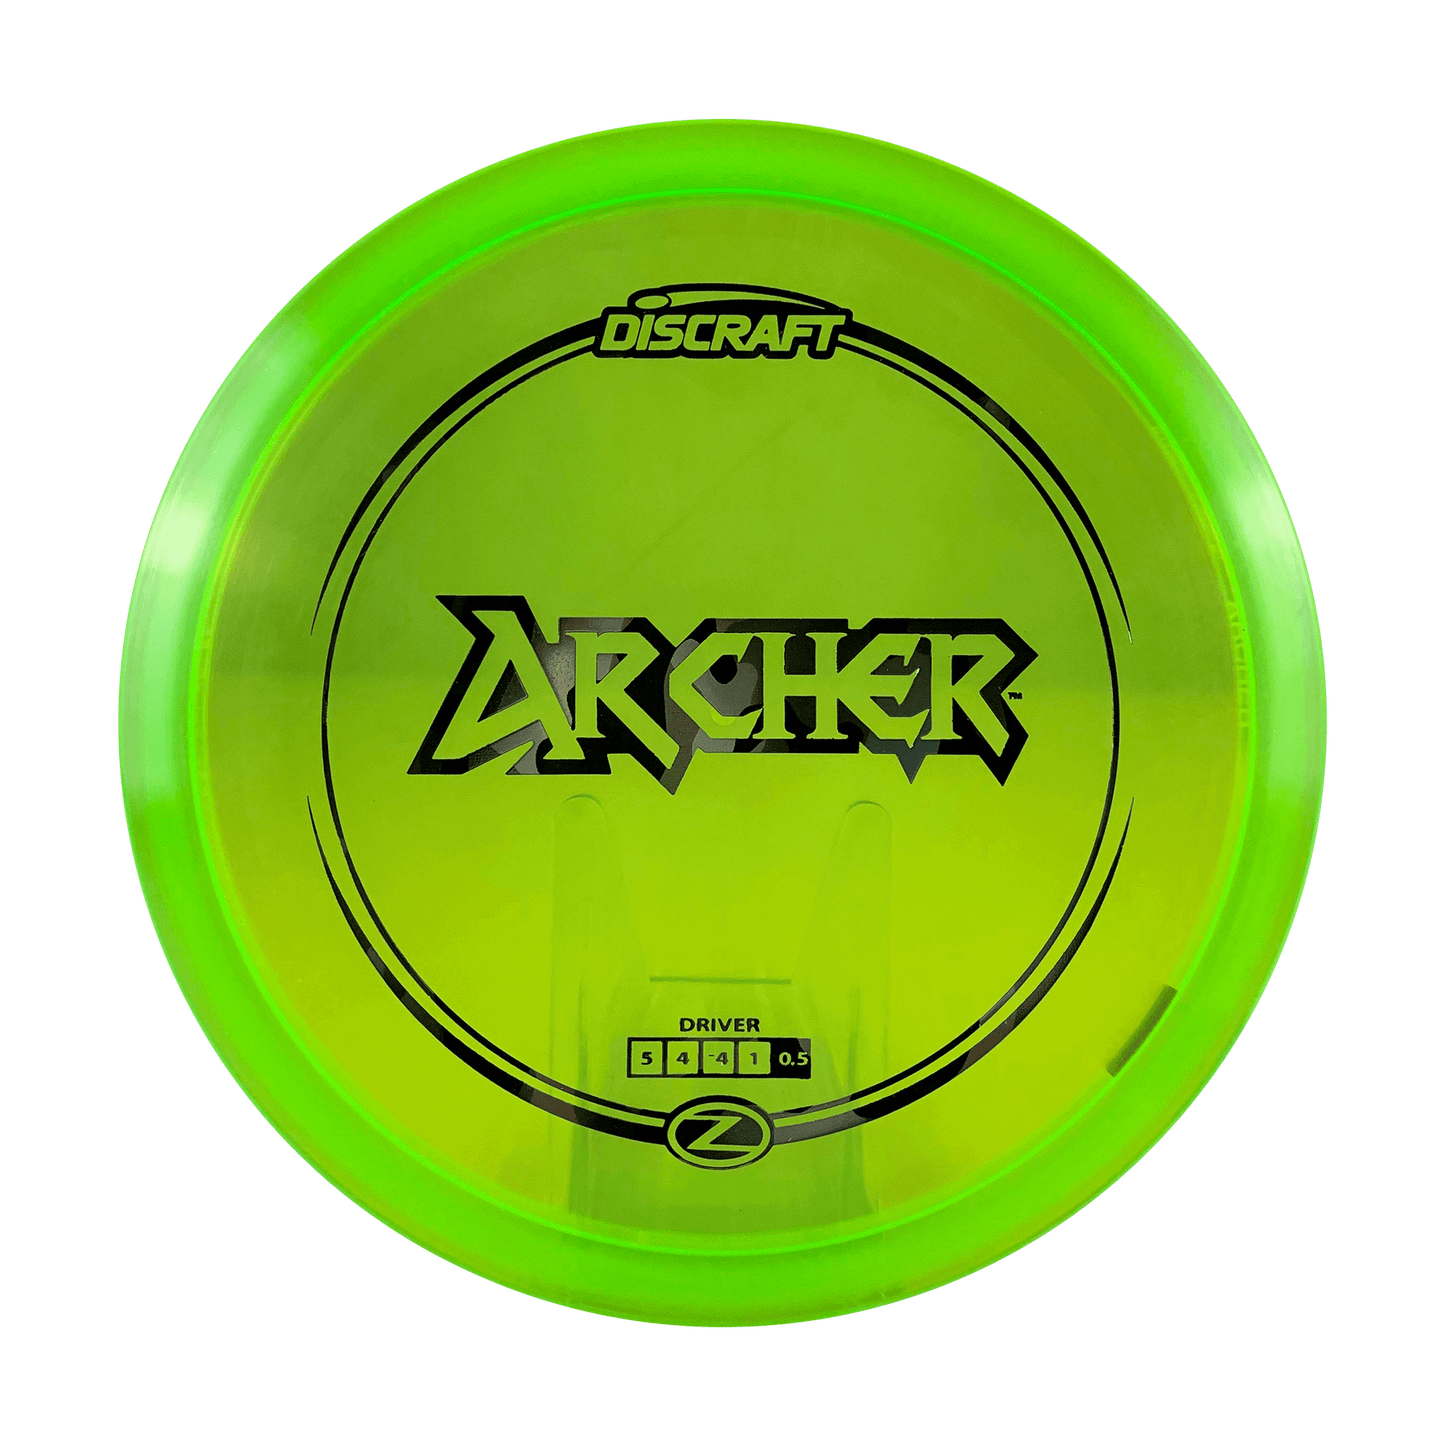 Z Archer Disc Discraft green 175 